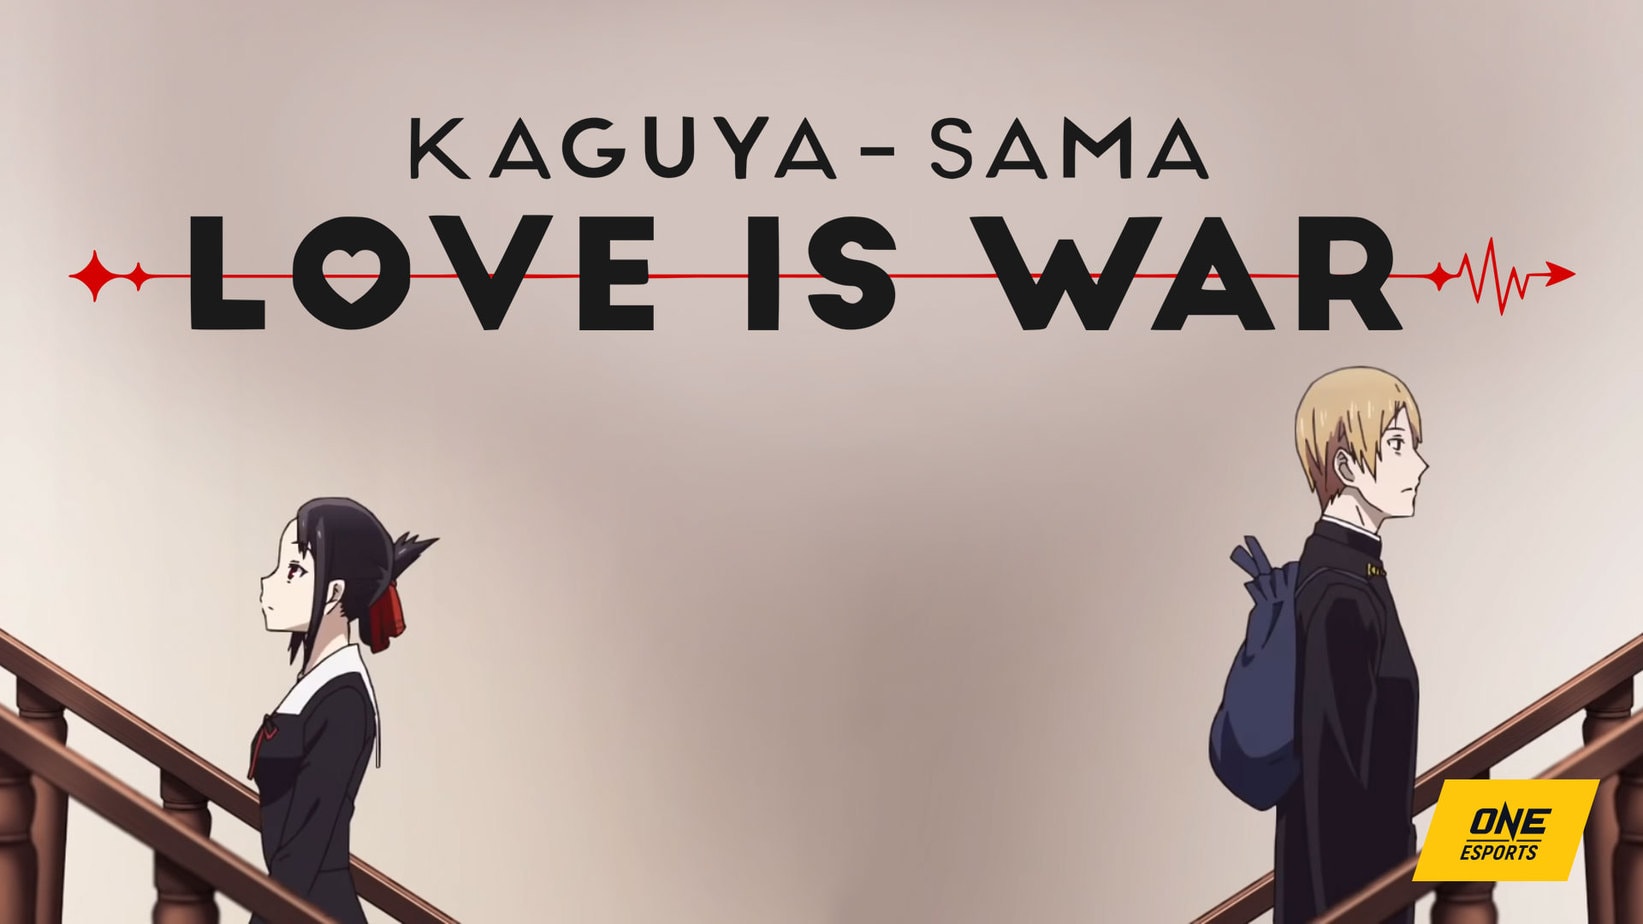 Kaguya-sama season 3 anime: Release date, story, characters, seiyuu, manga